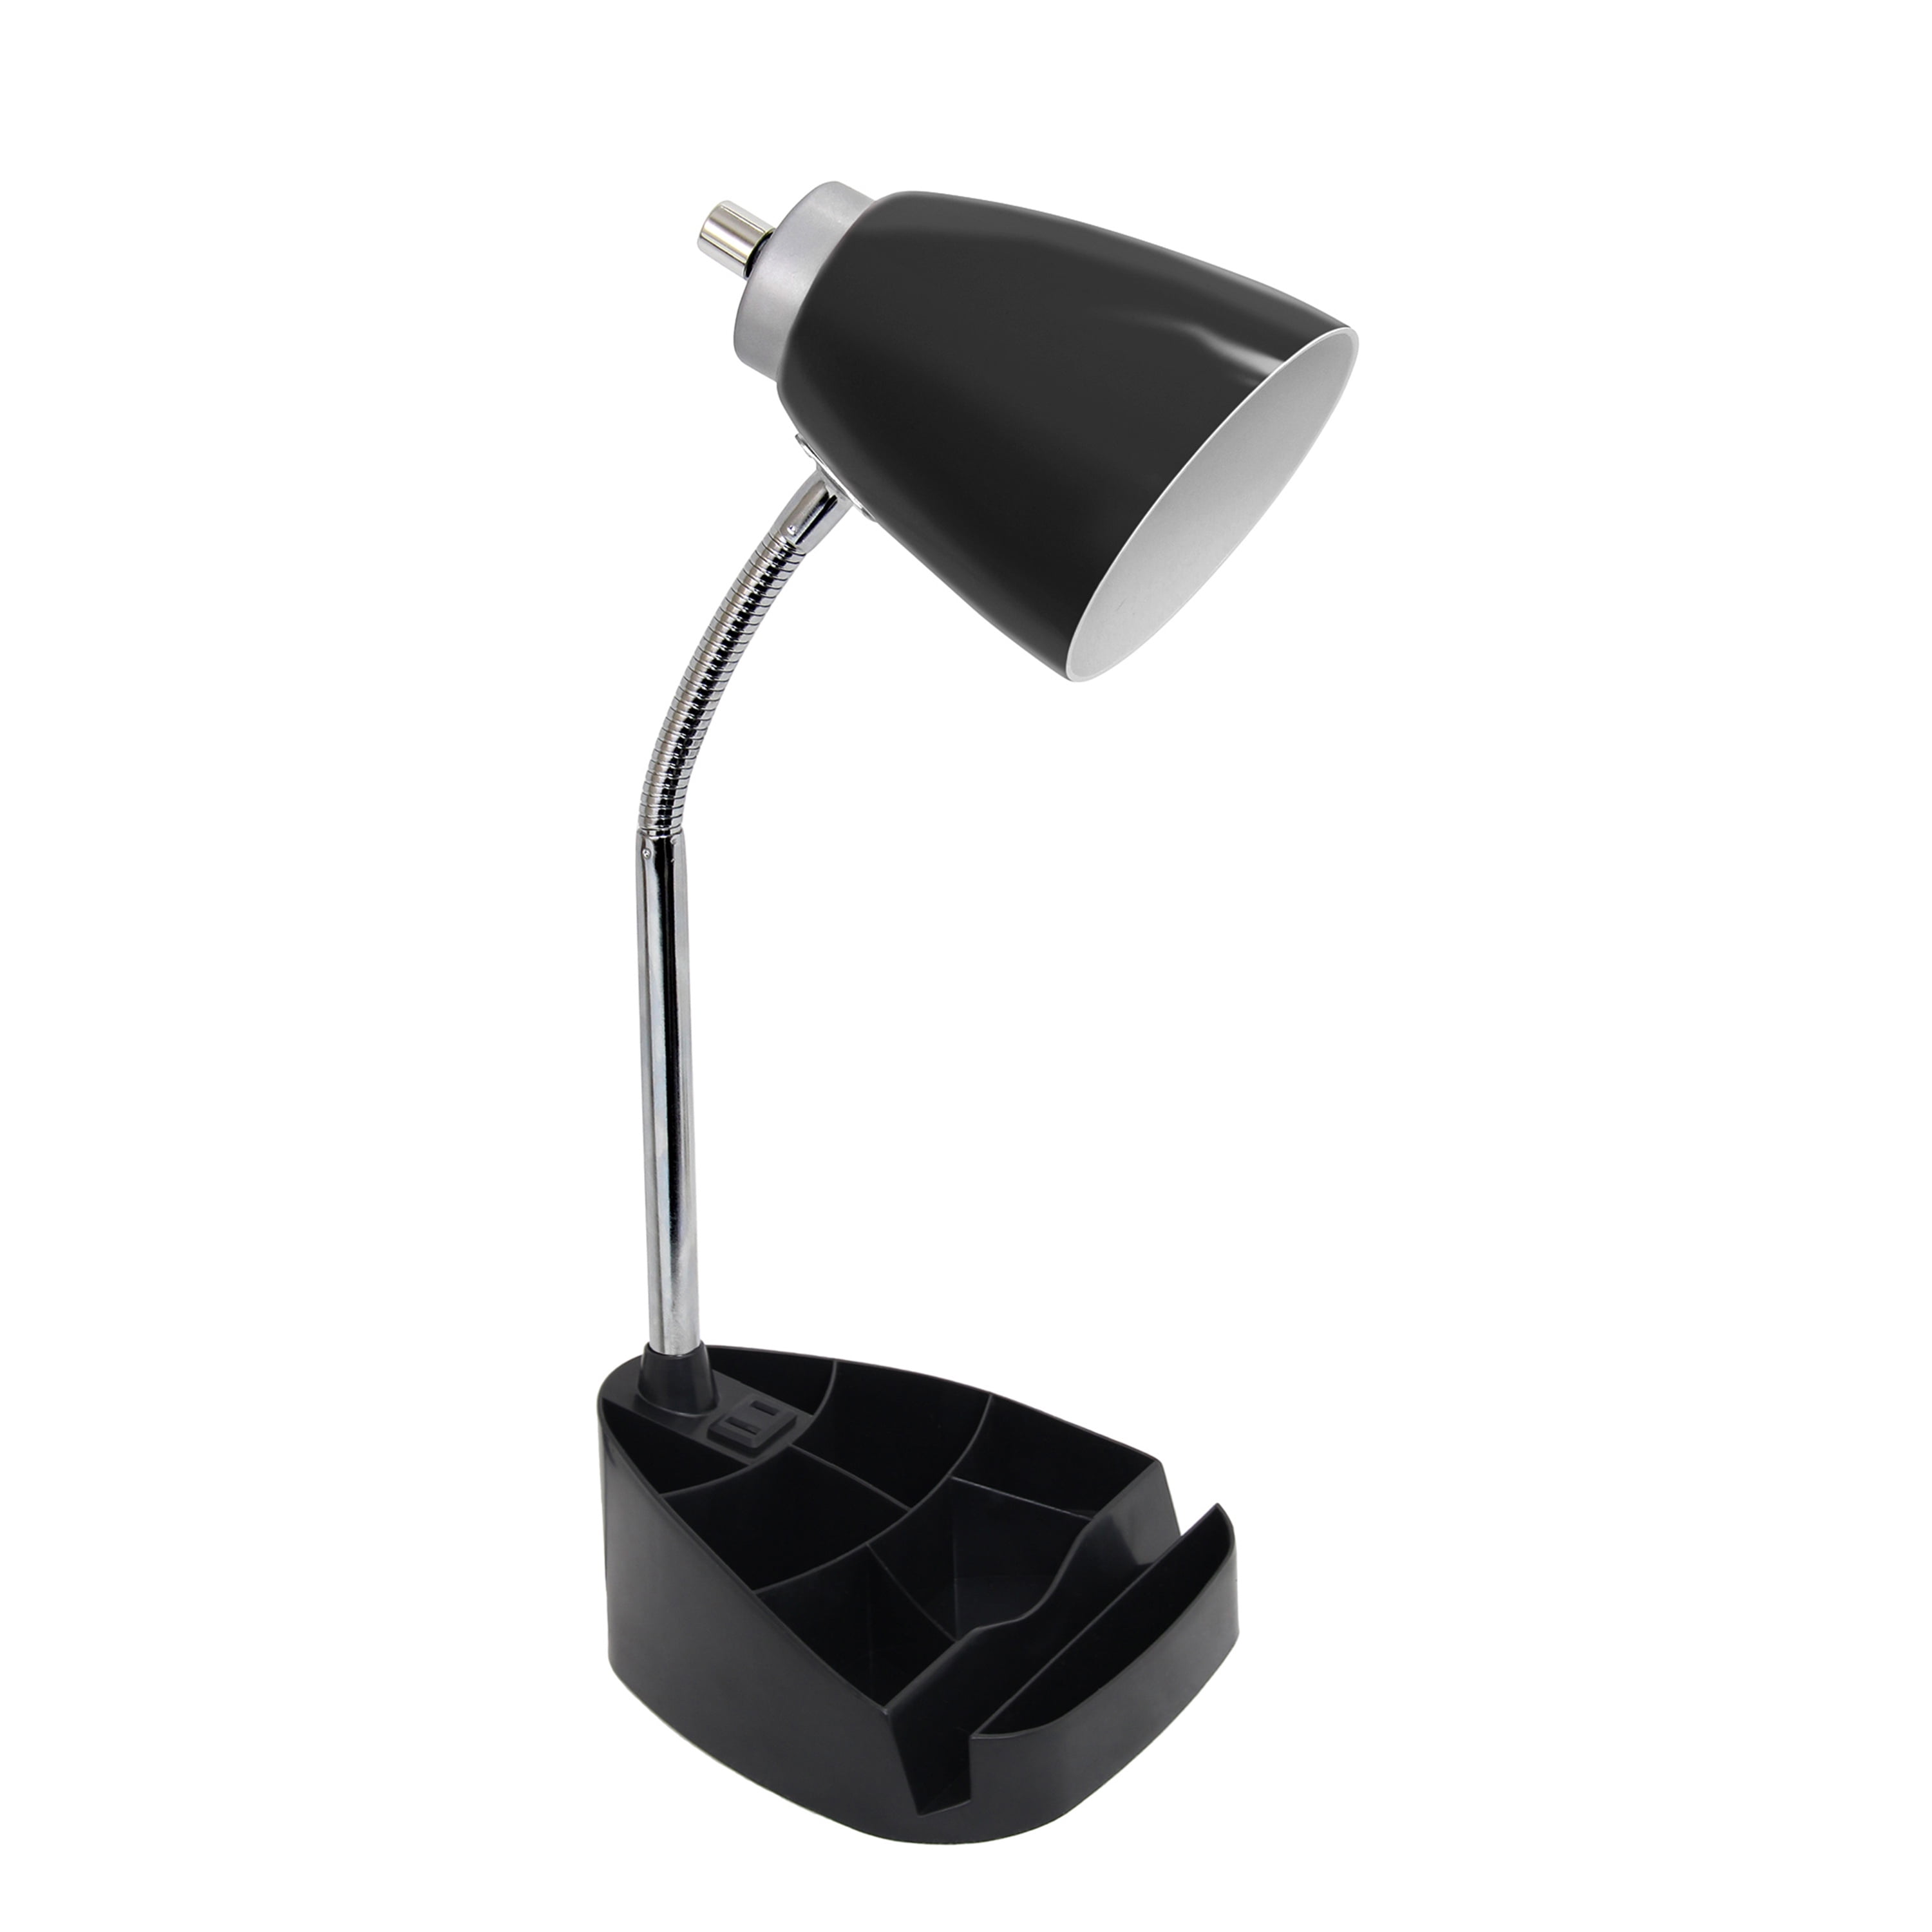 Gooseneck Organizer Desk Lamp With Ipad Tablet Stand Book Holder & Charging Outlet, Black